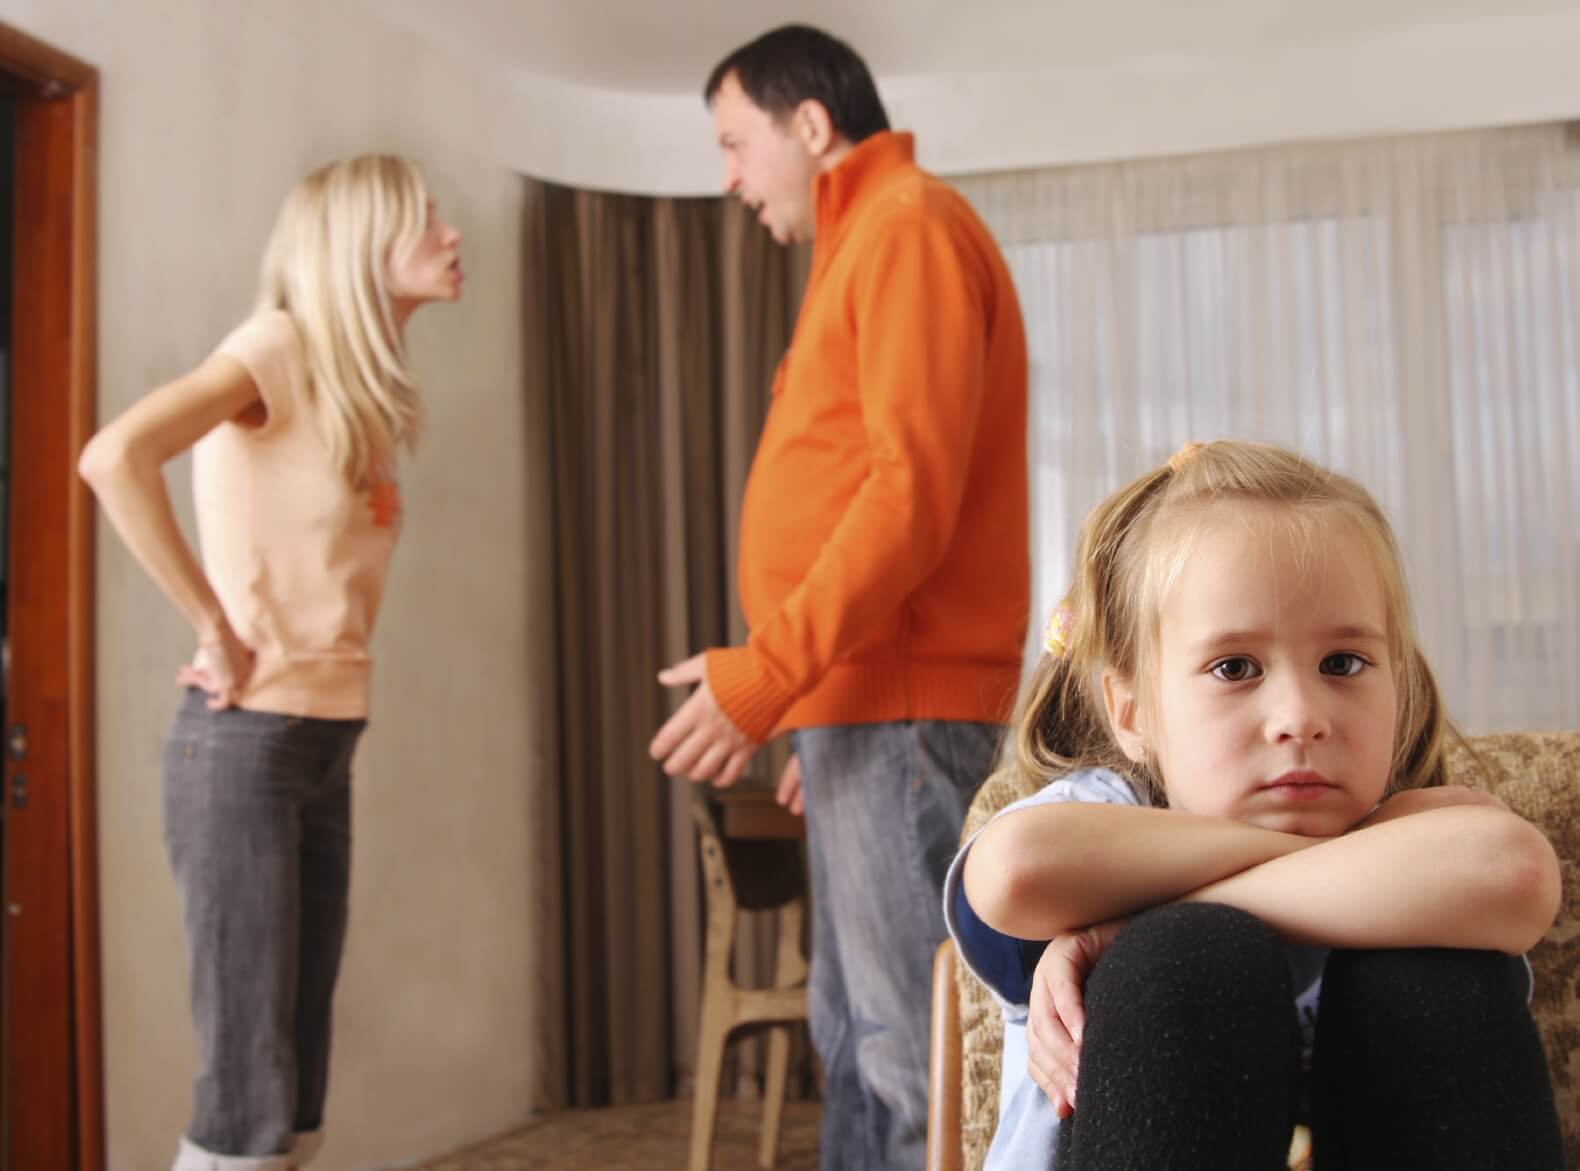 Parents fight & kids suffer during divorce